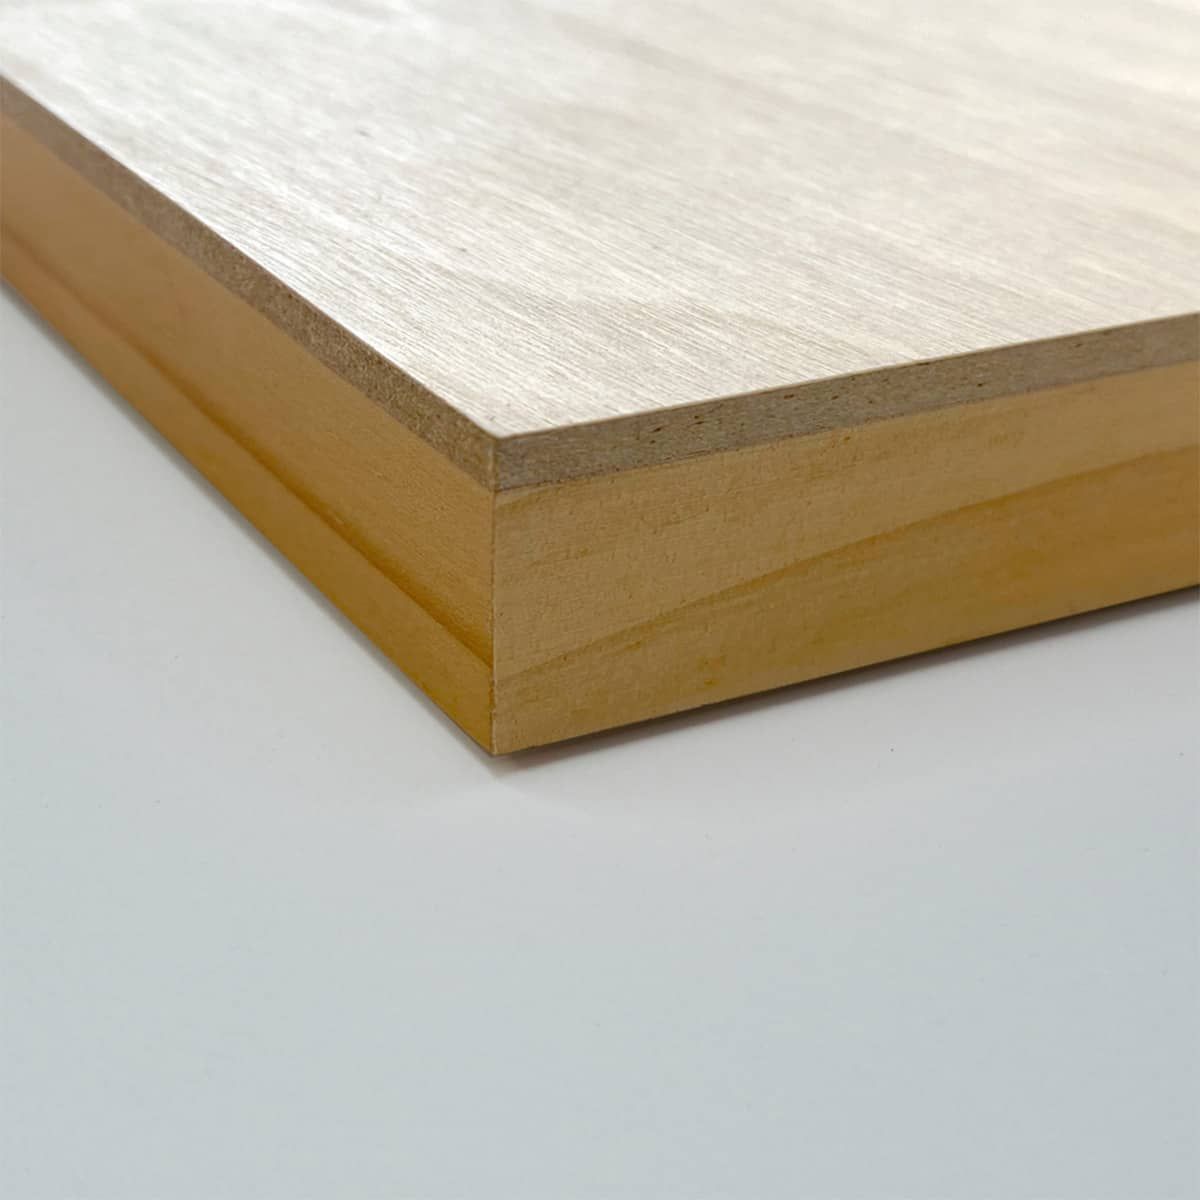 Rigid birch plywood surface